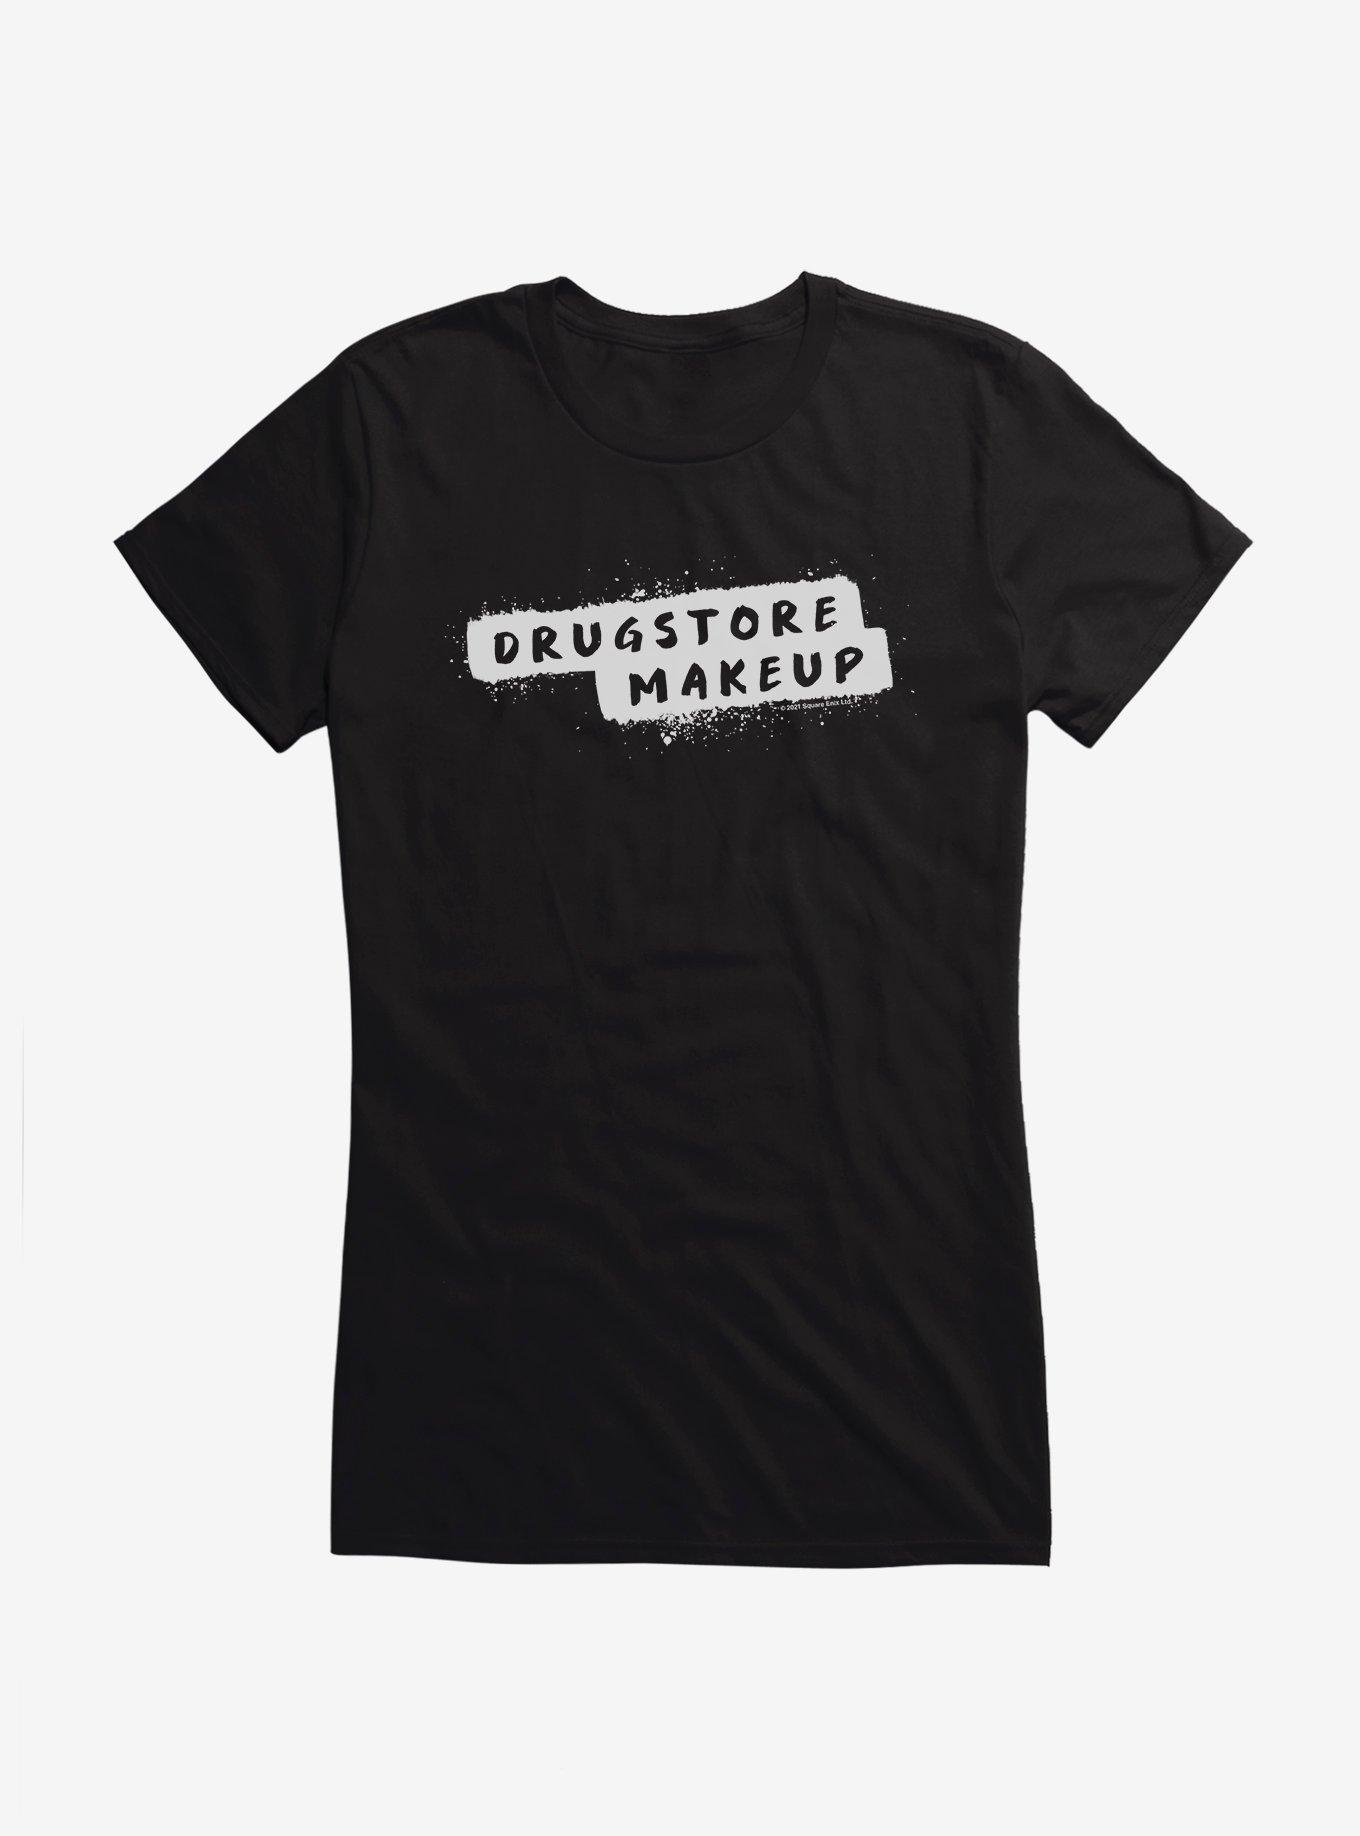 Square Enix Drugstore Makeup Girls T-Shirt, BLACK, hi-res